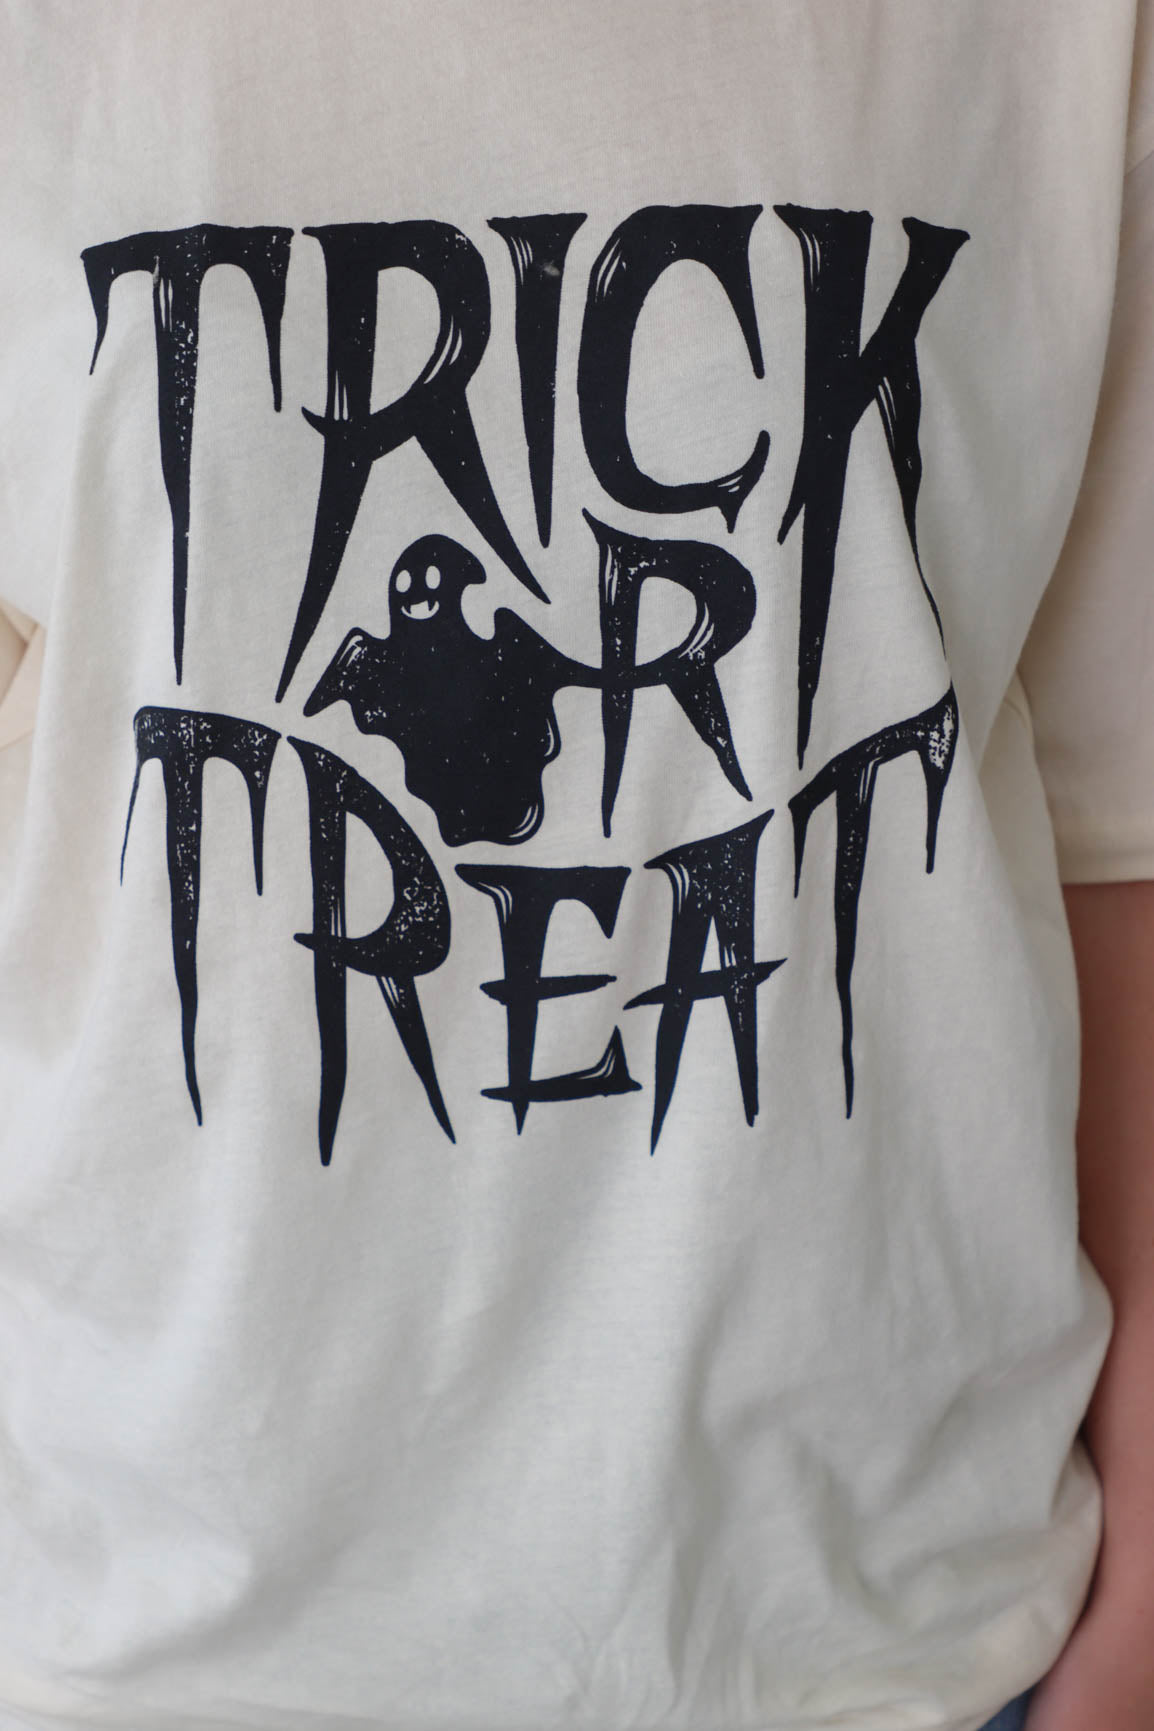 girl wearing cream trick or treat graphic t-shirt